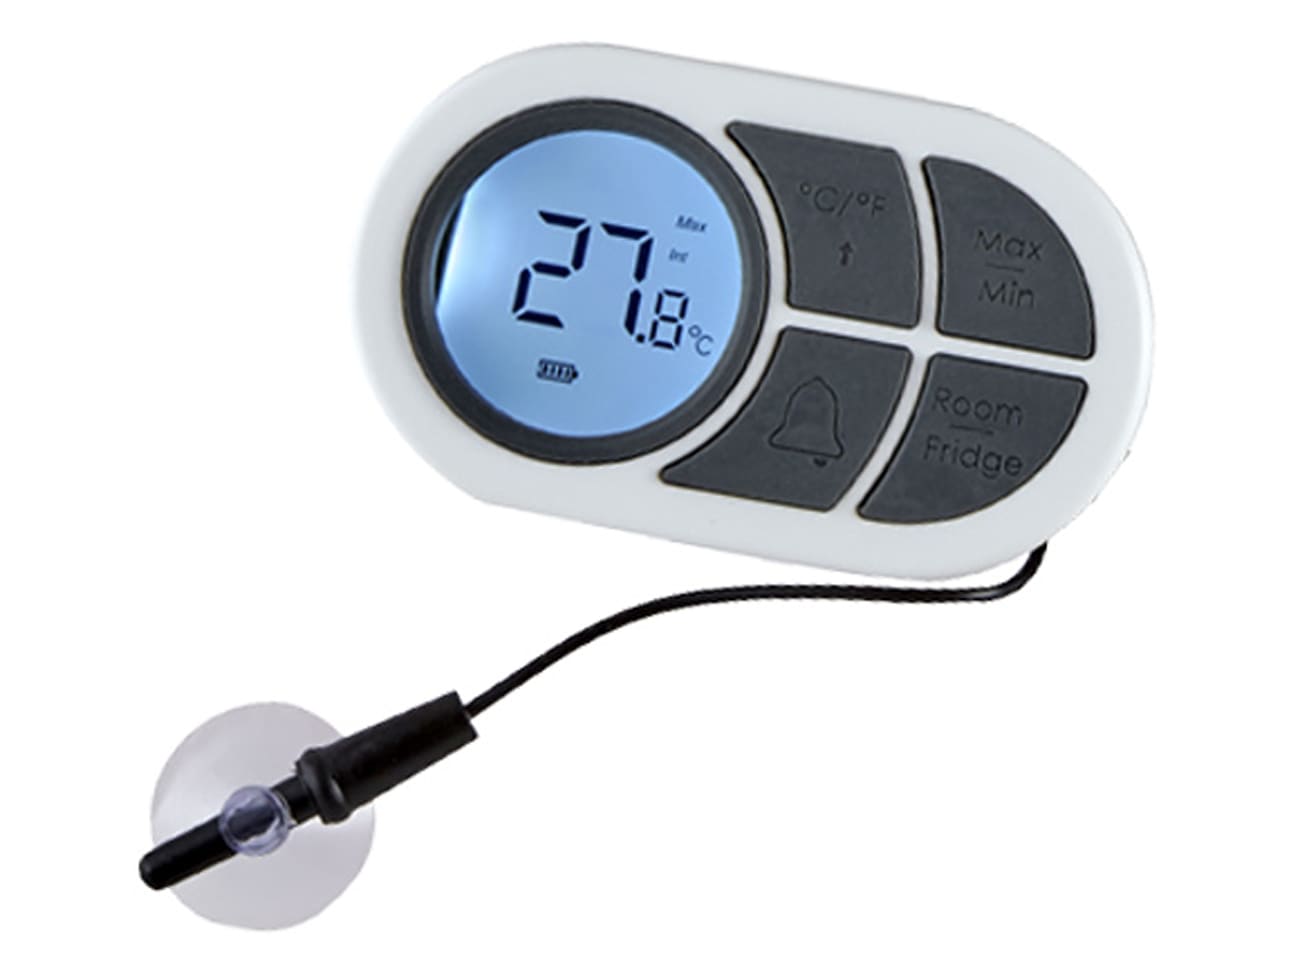 Thermomètre Frigo, Thermometre Réfrigérateur avec Alarme